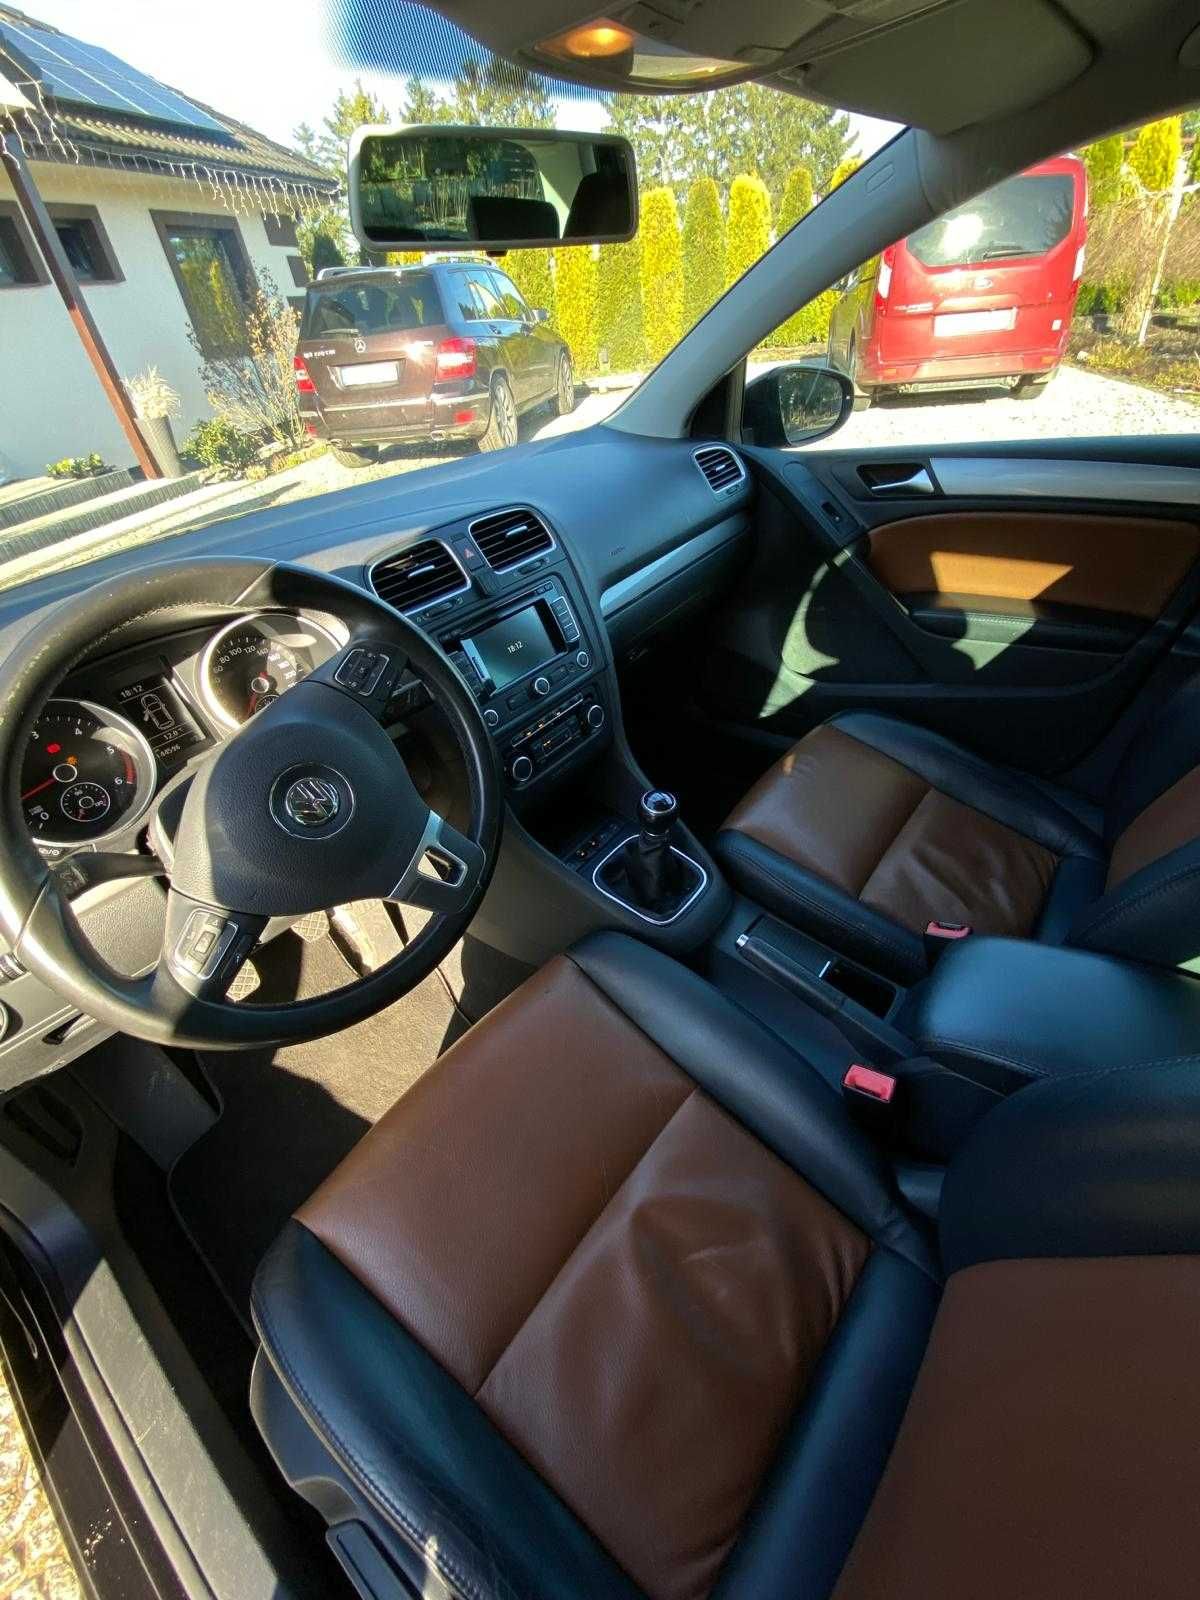 VW Golf VI bluemotion, bogato wyposażony